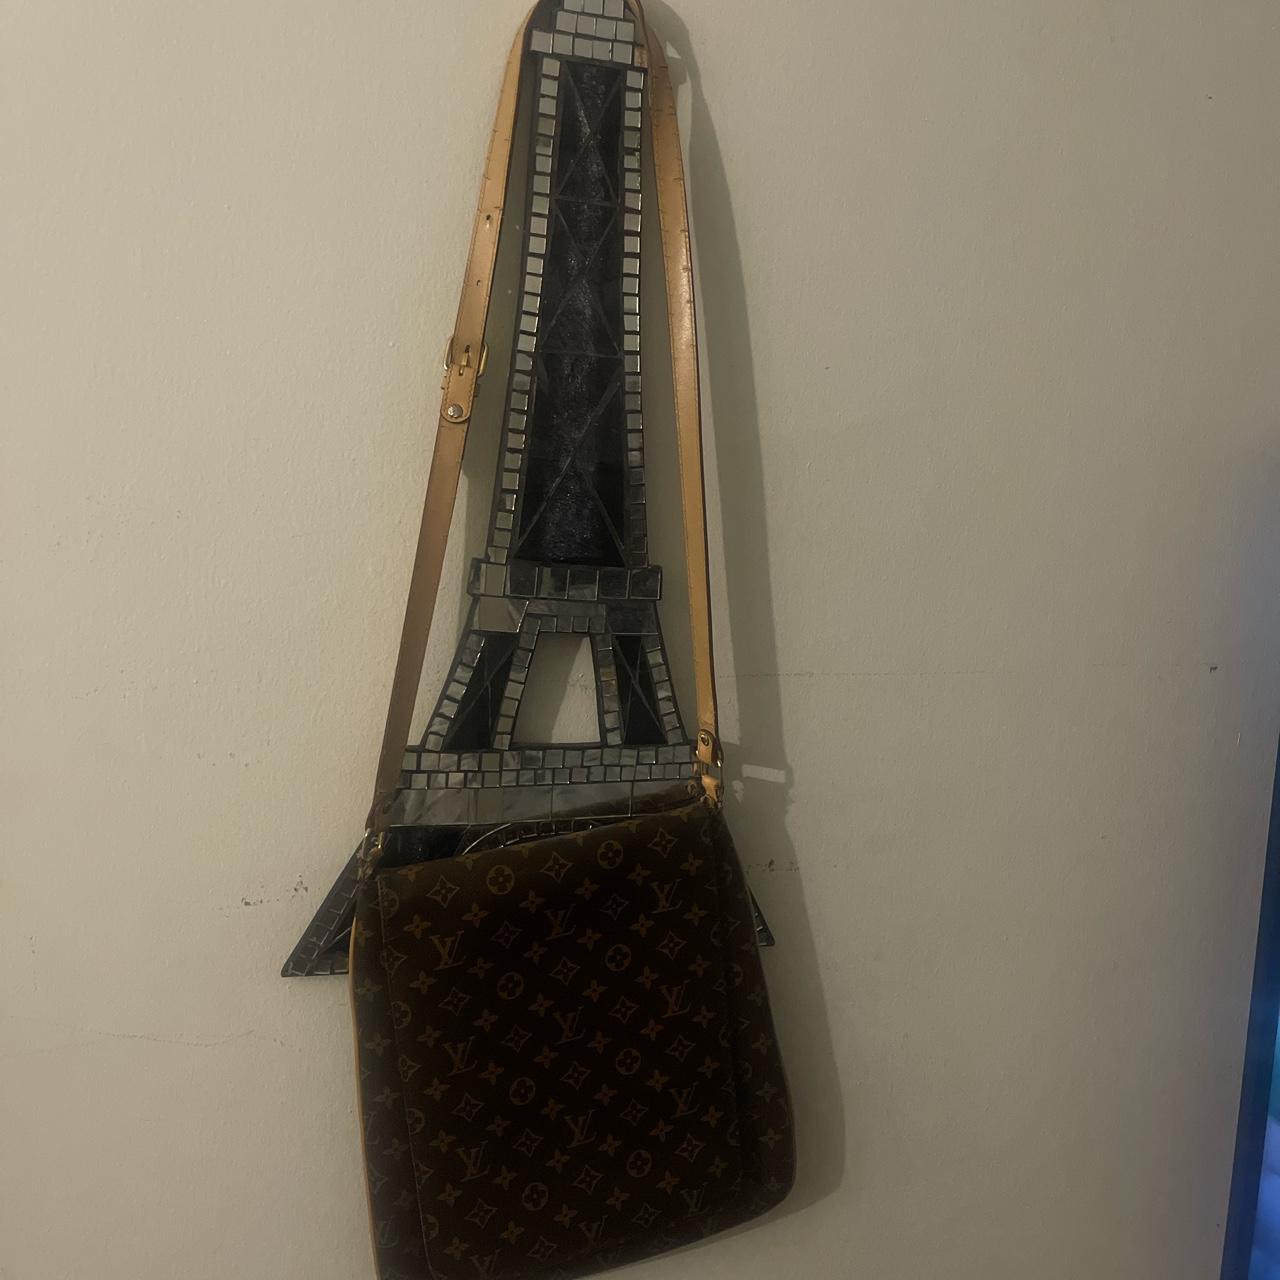 Vintage Louis Vuitton crossbody bag. I believe it's - Depop